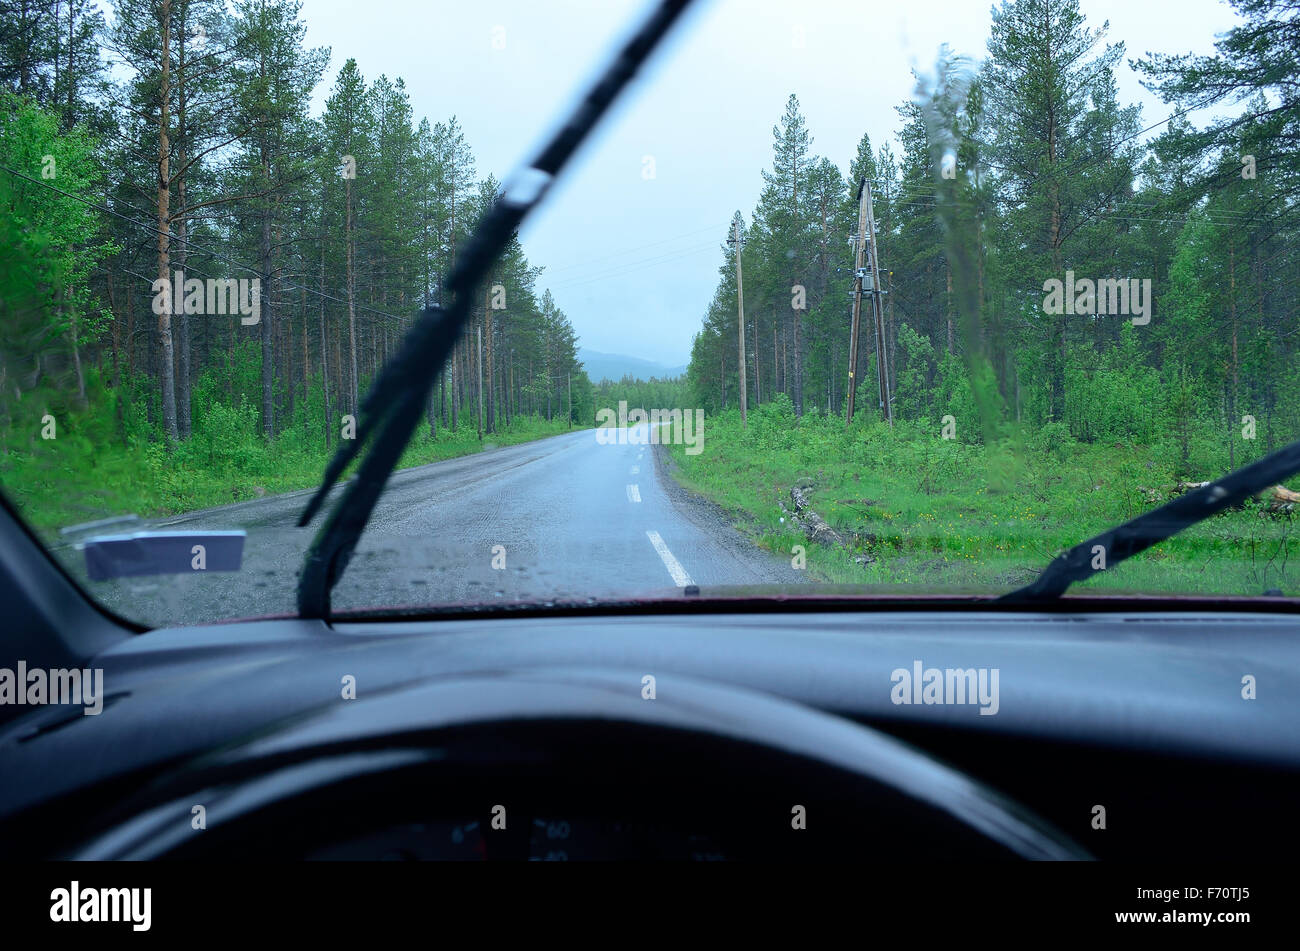 rain on car windshield from inside car Stock Photo ...